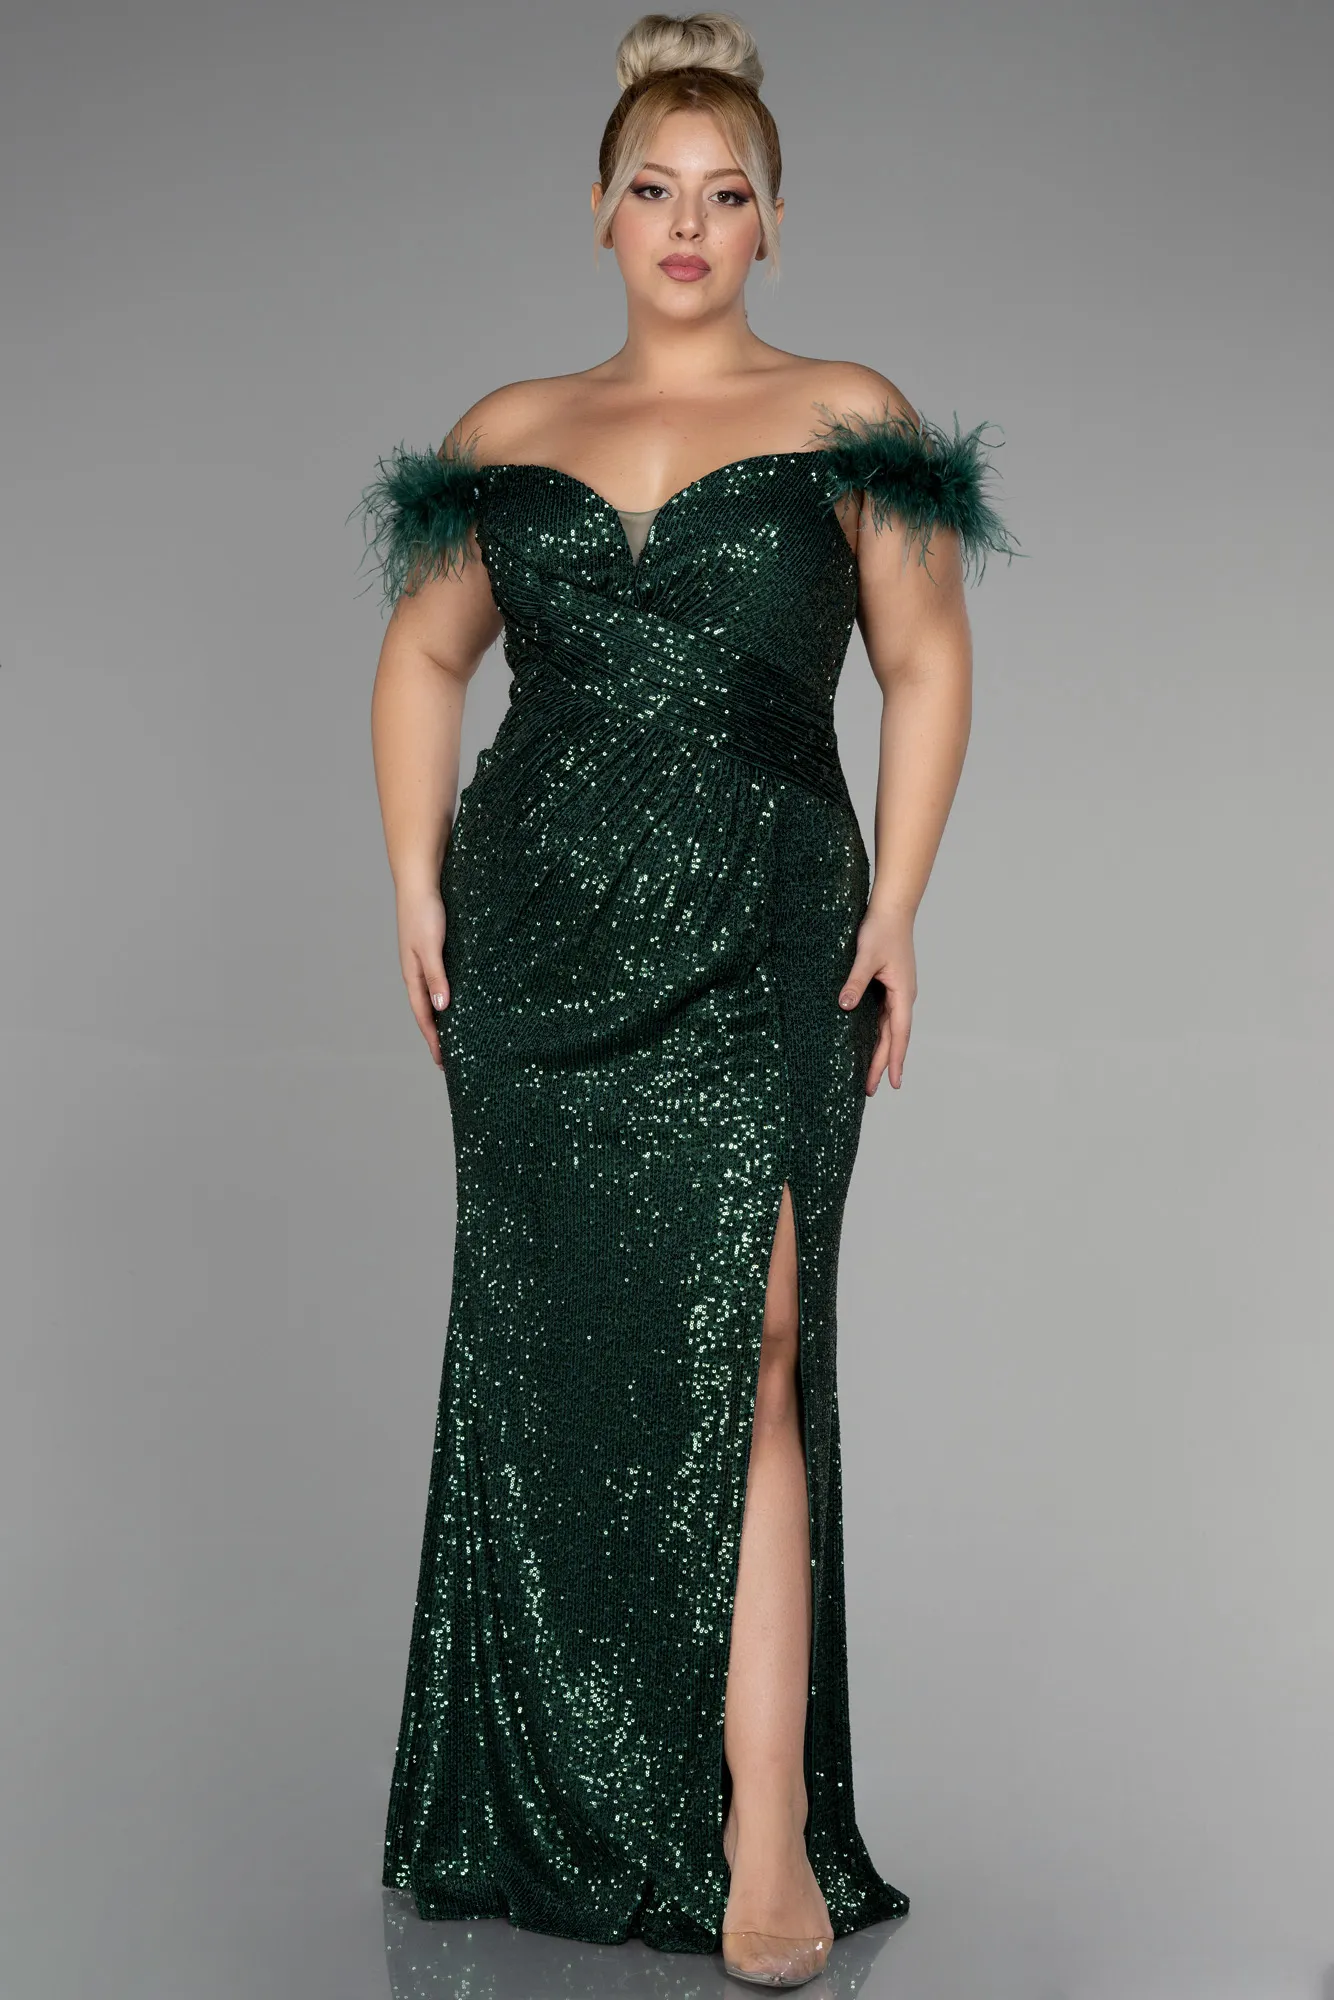 Emerald Green-Long Scaly Plus Size Evening Dress ABU3193